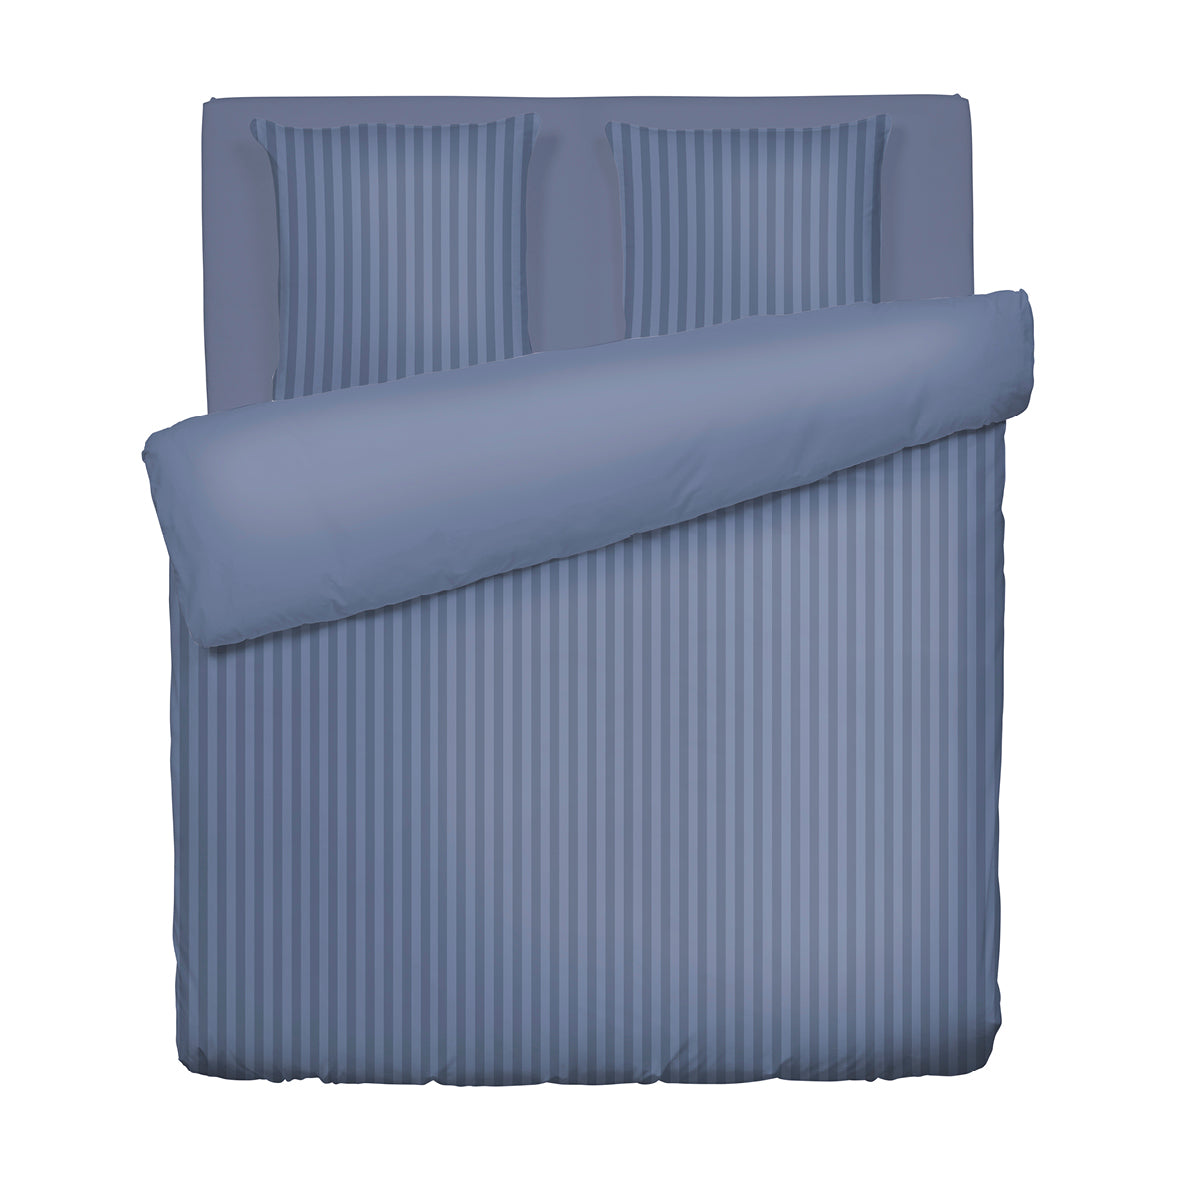 Duvet cover + pillowcase(s) cotton satin dobby stripe woven - Blue 260 x 240 cm + 2 x (63 x 63 cm)